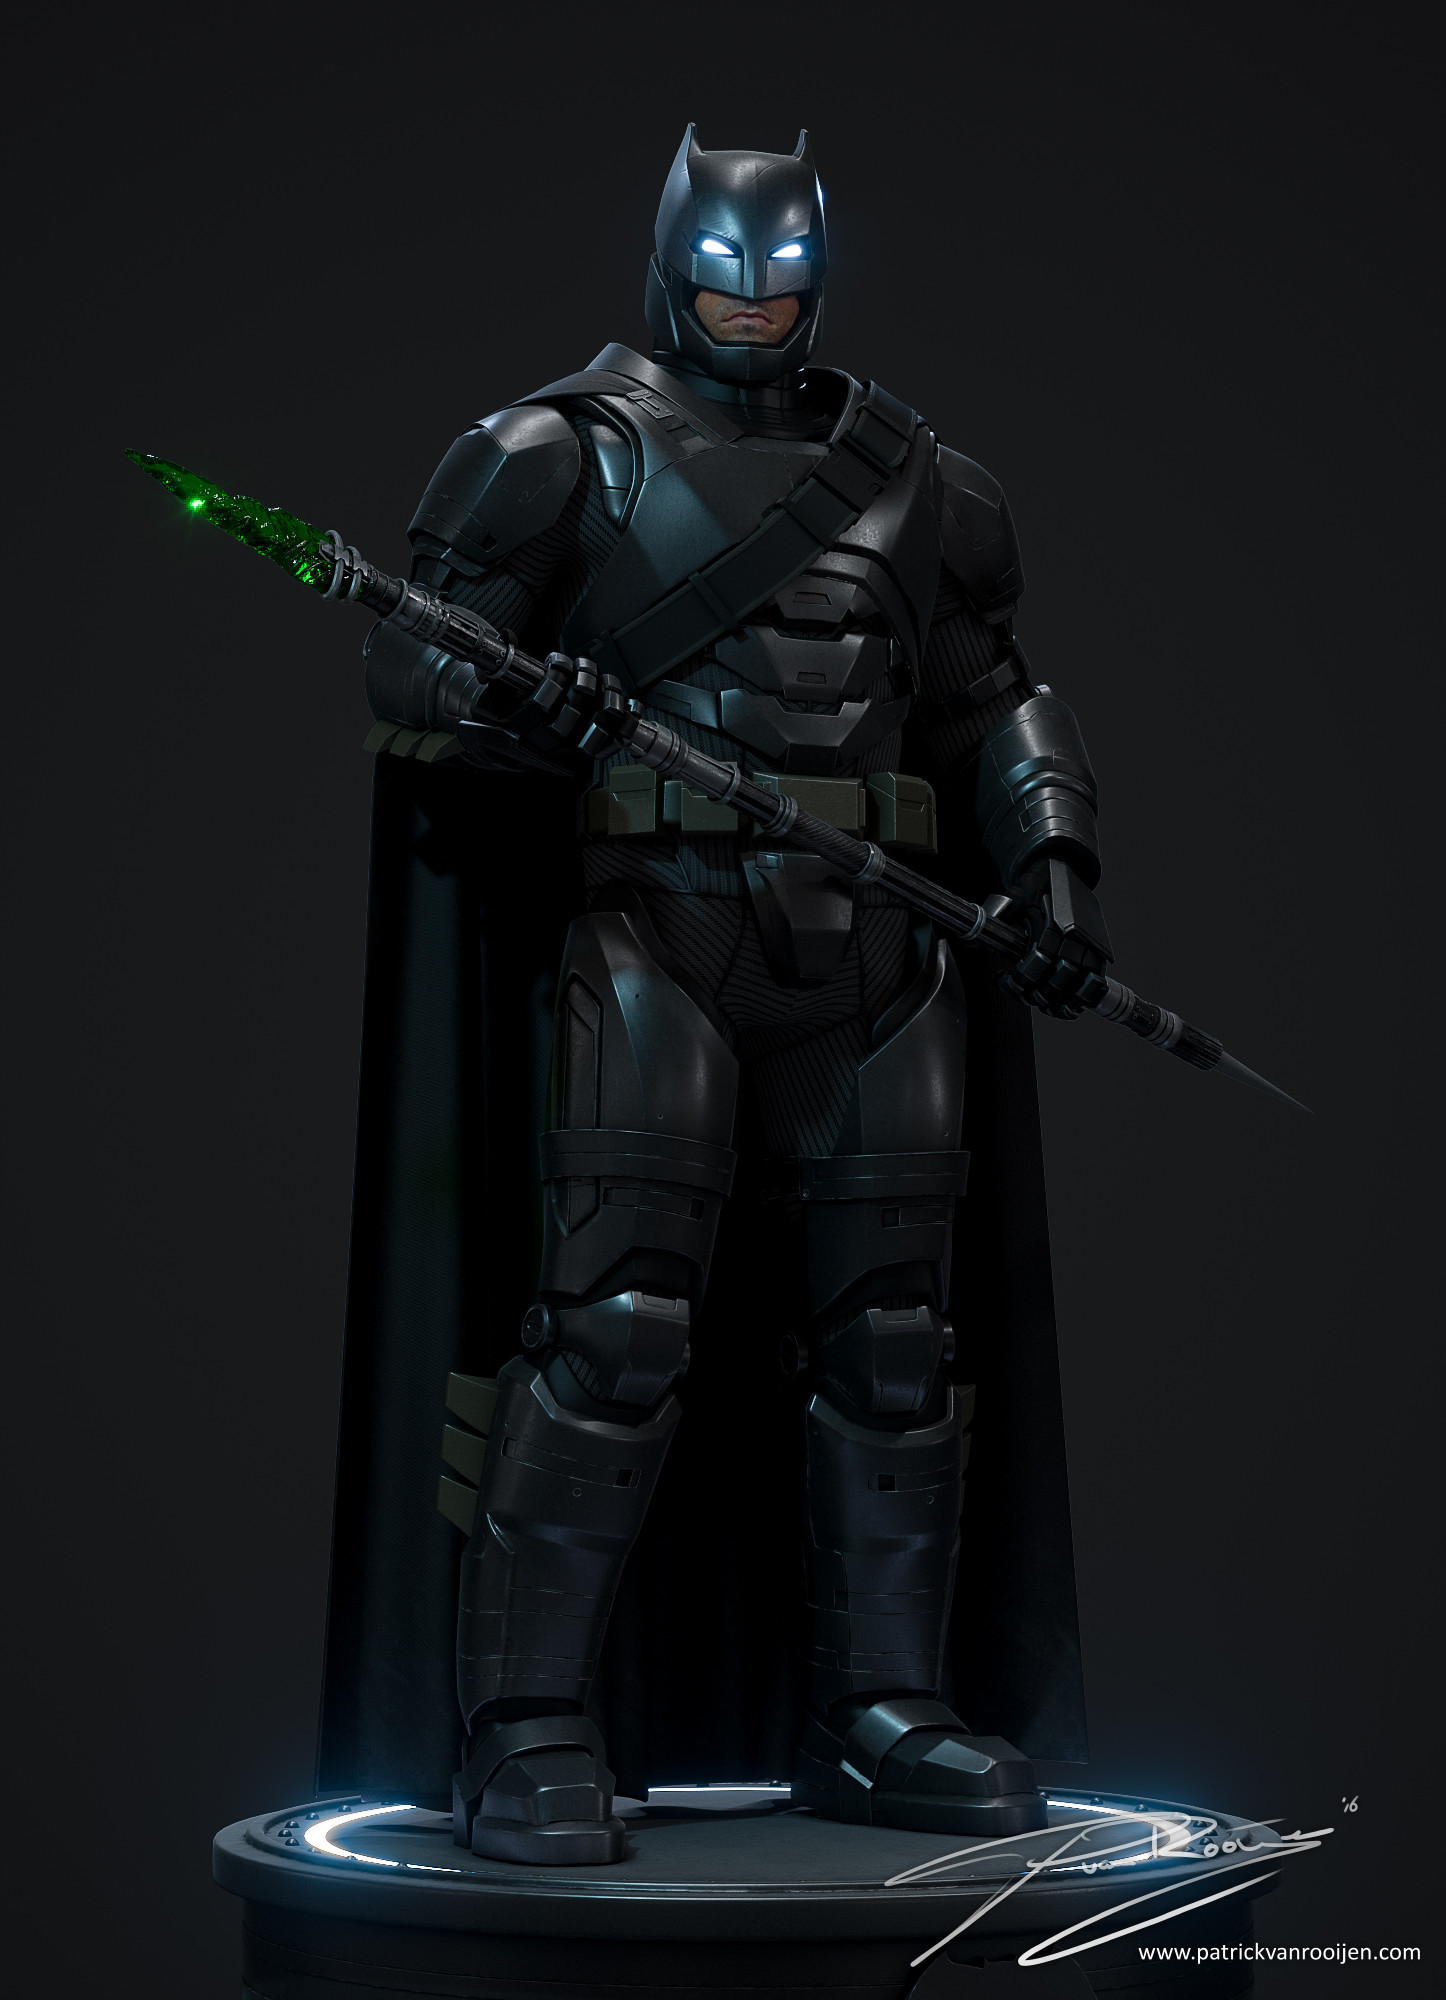 Patrick van Rooijen - 3d character artist - Batman v Superman - Armored Suit